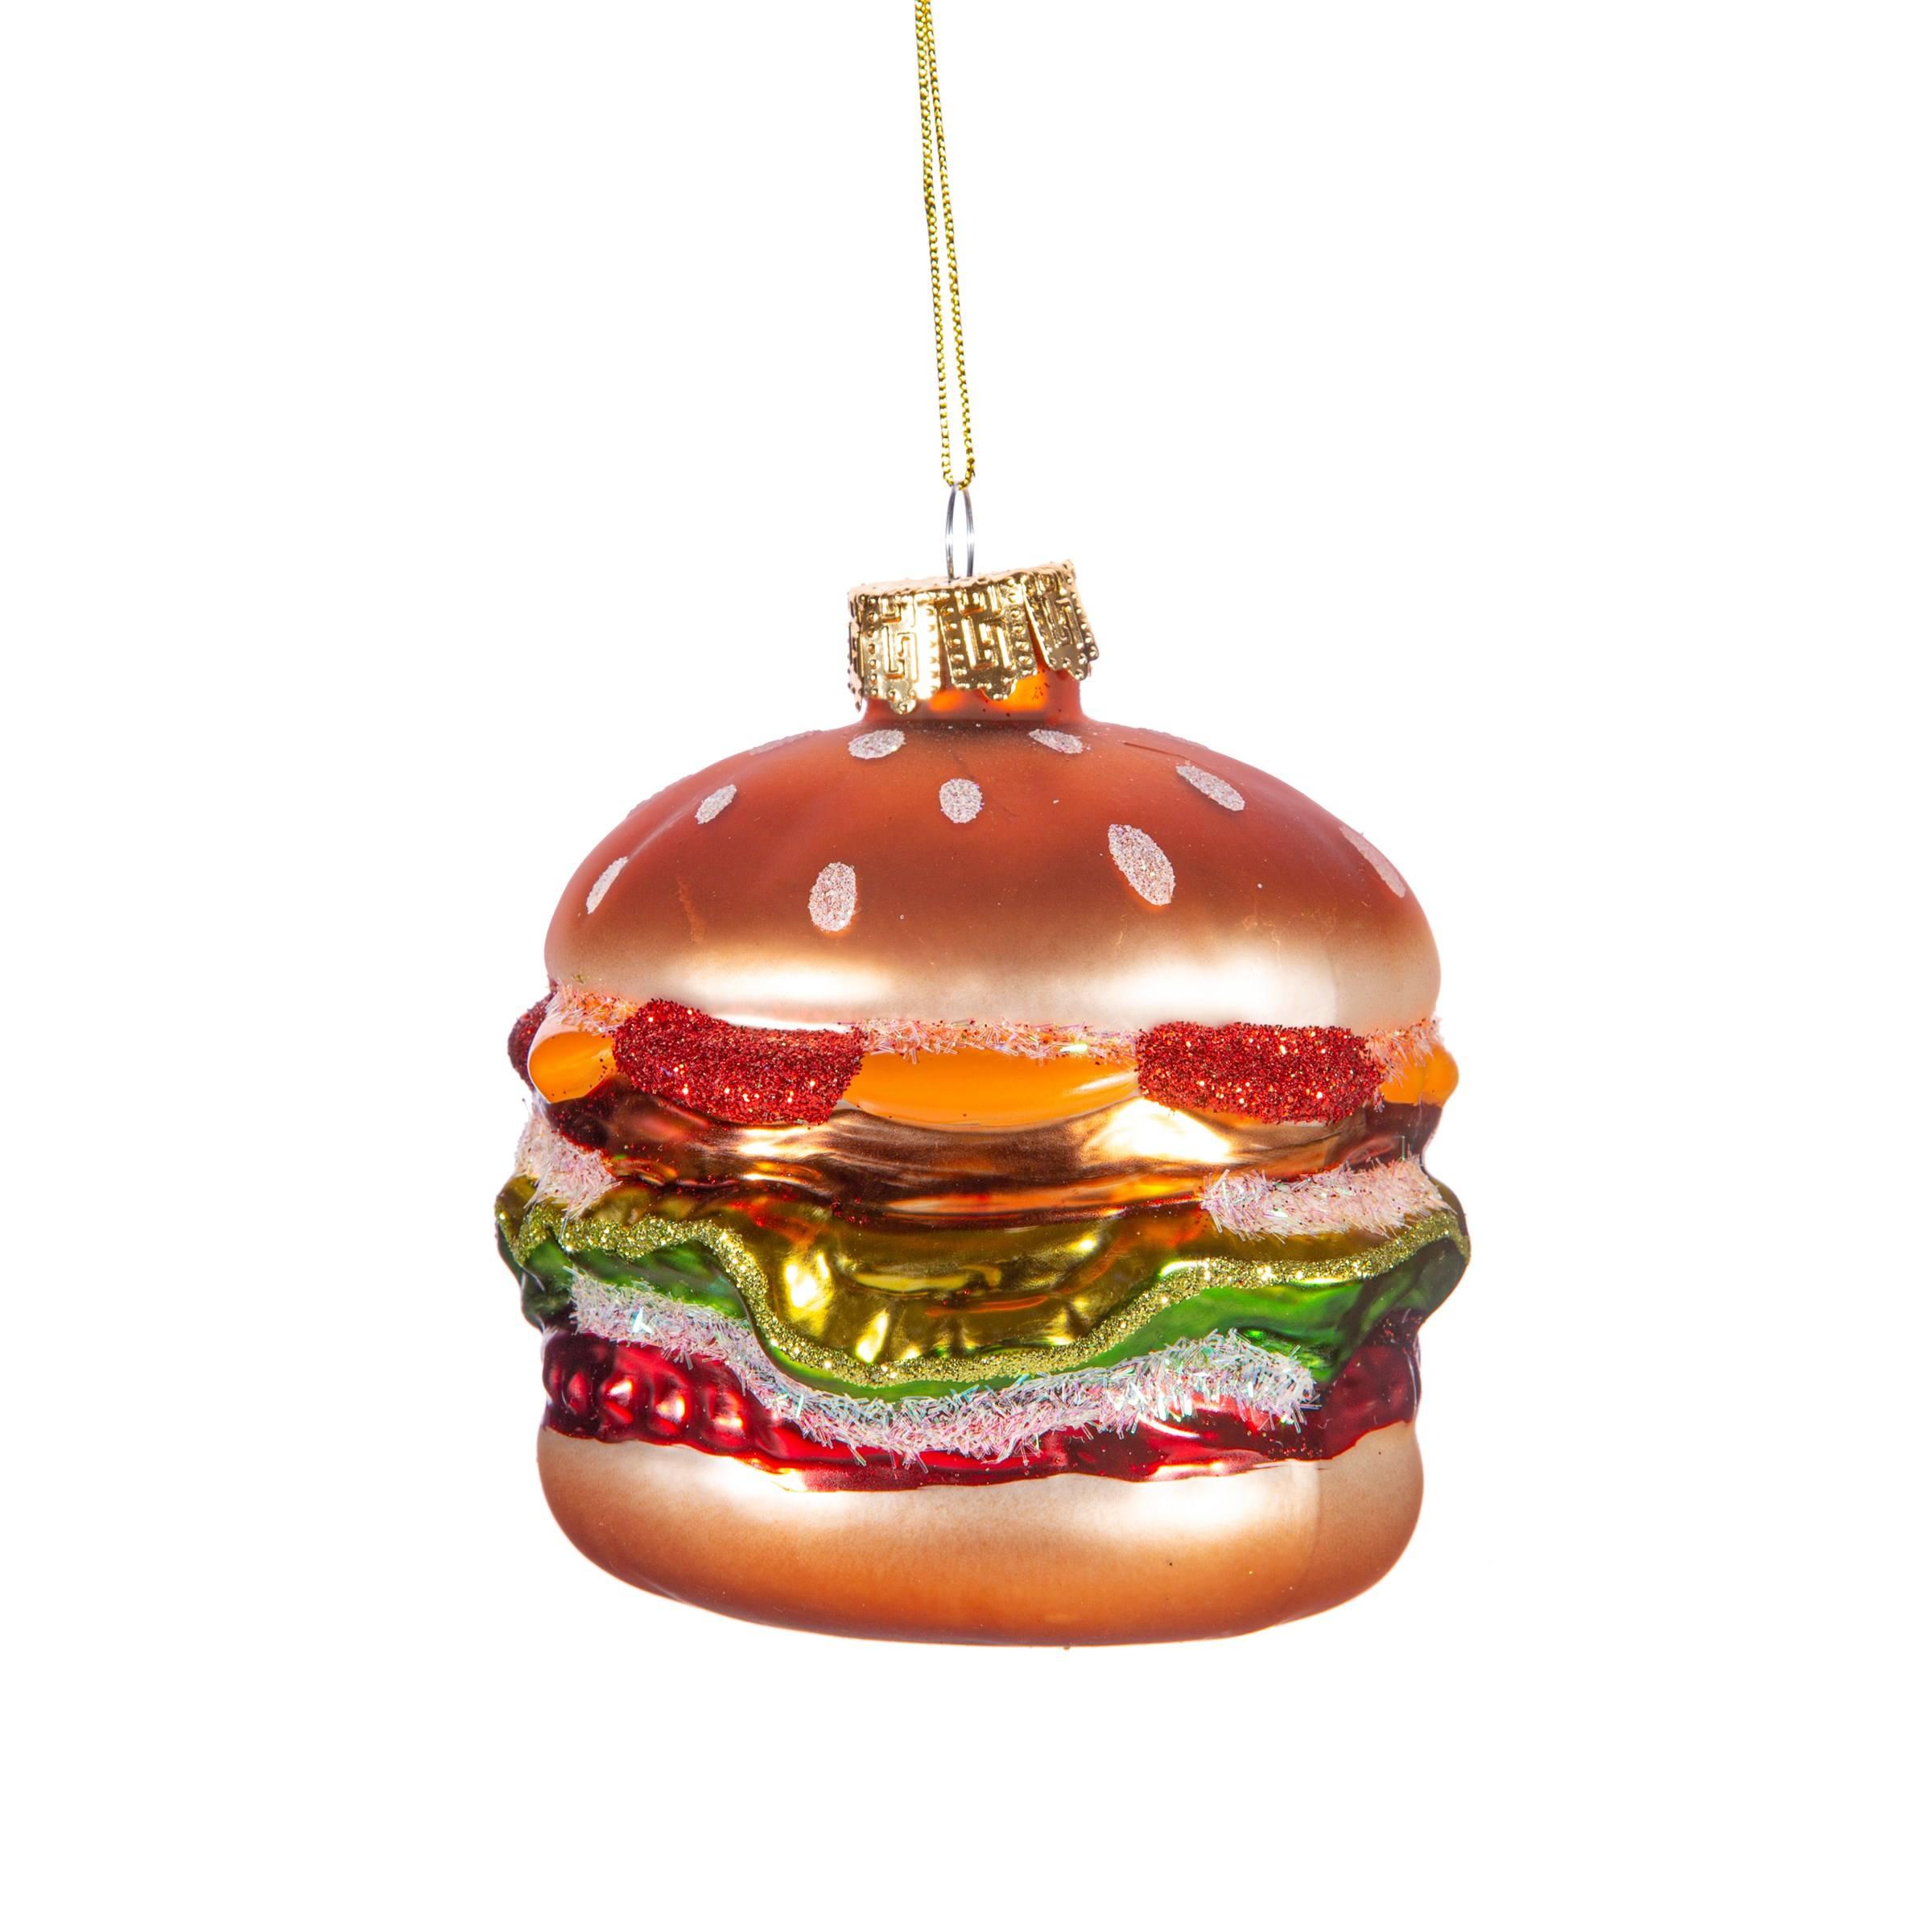 Big Fat Burger Shaped Bauble Christmas Decorations Foxyavenue UK